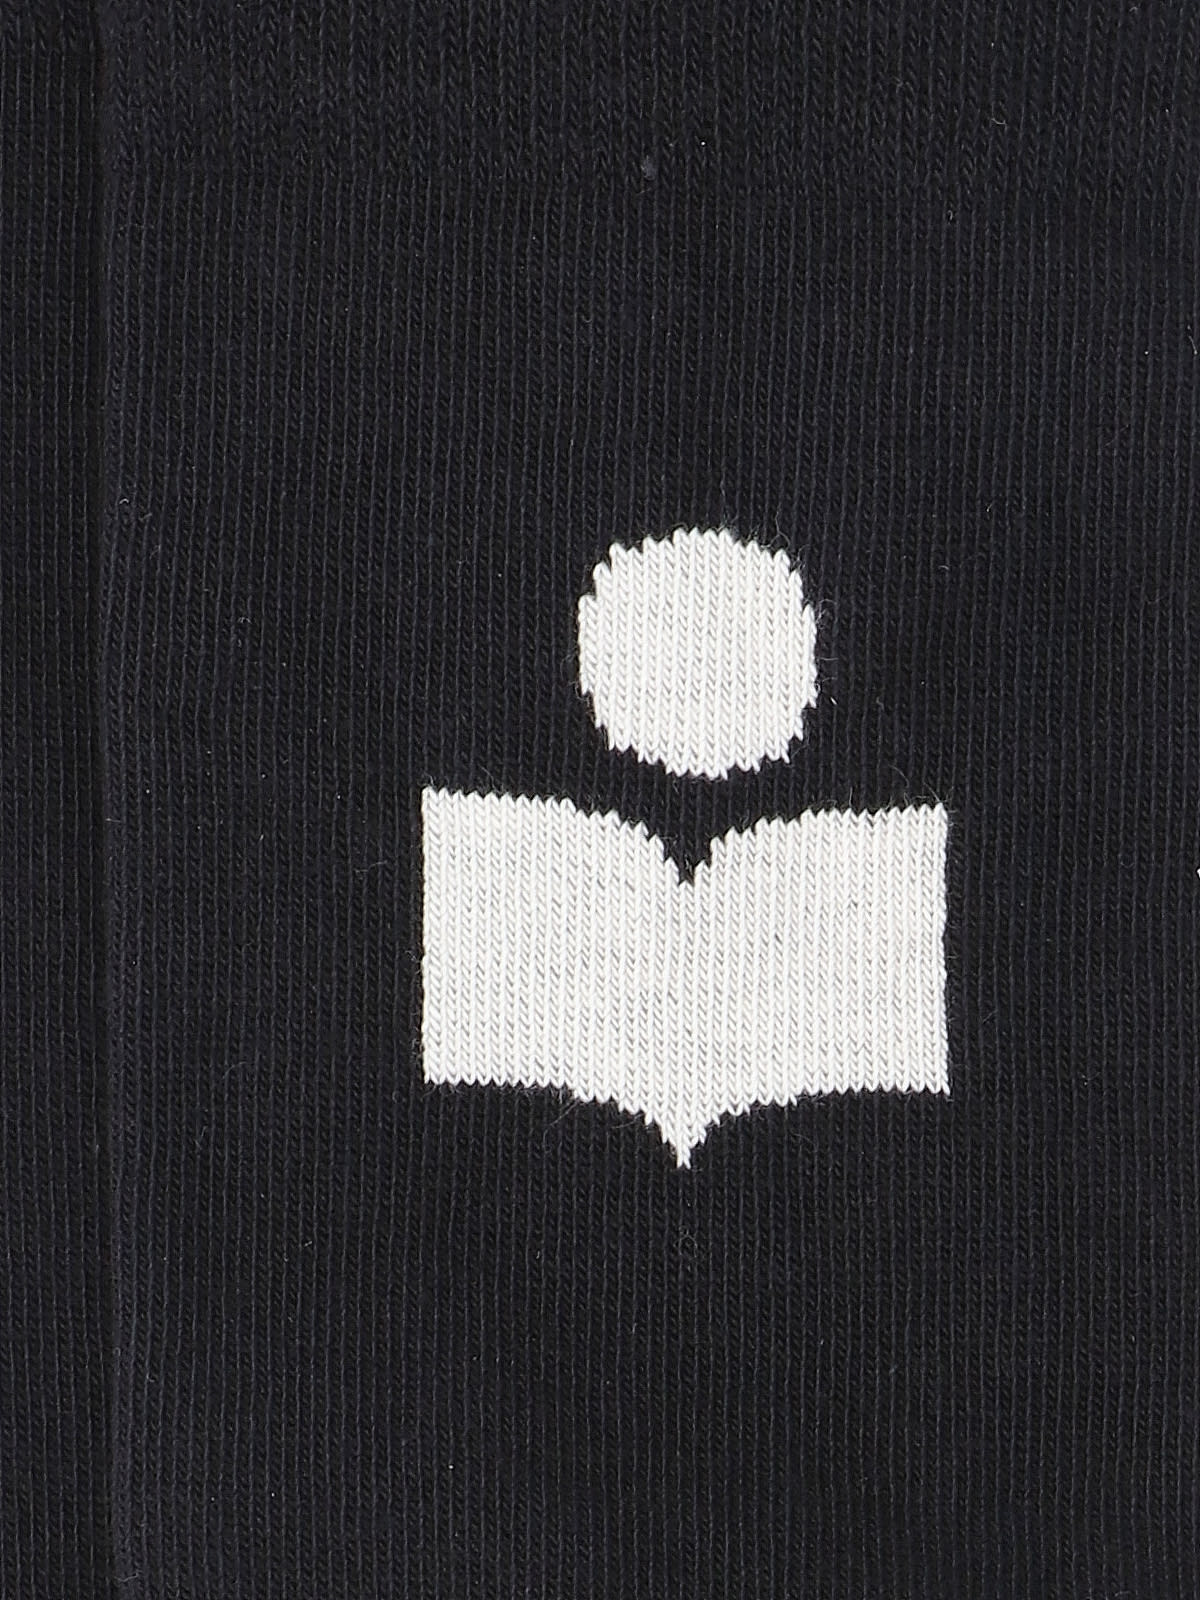 Shop Isabel Marant Logo Socks In Black